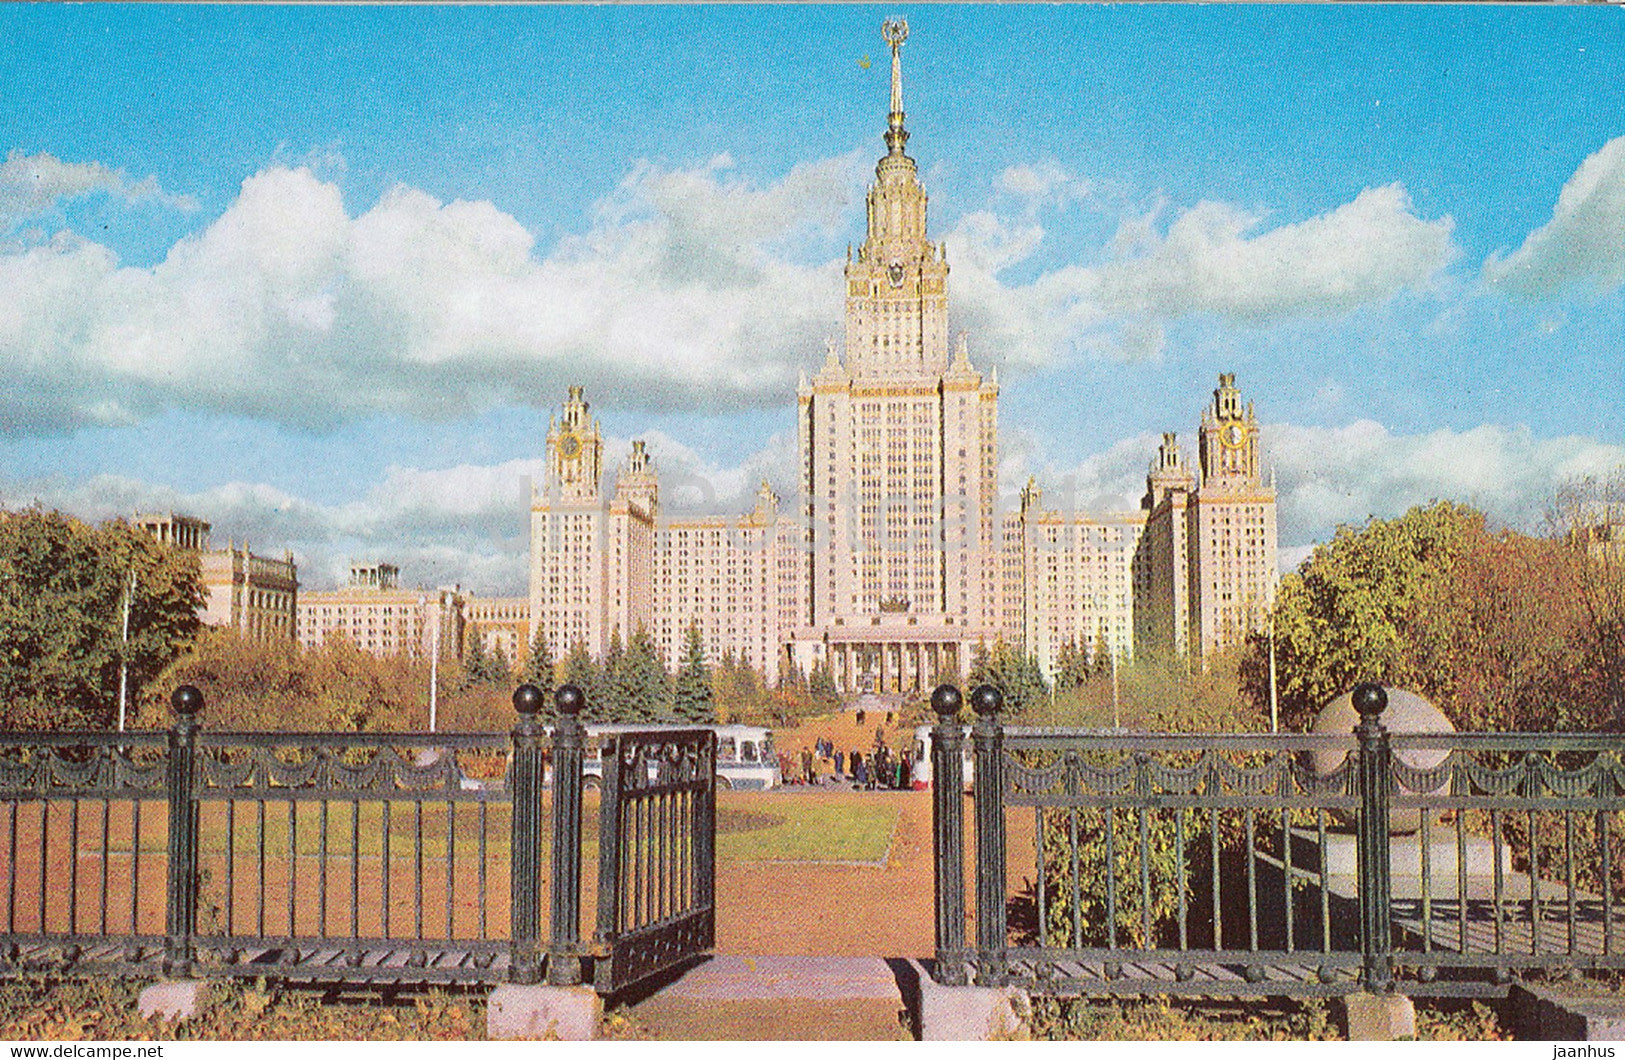 Moscow - Lomonosov University on Lenin Hills - 1974 - Russia USSR - unused - JH Postcards